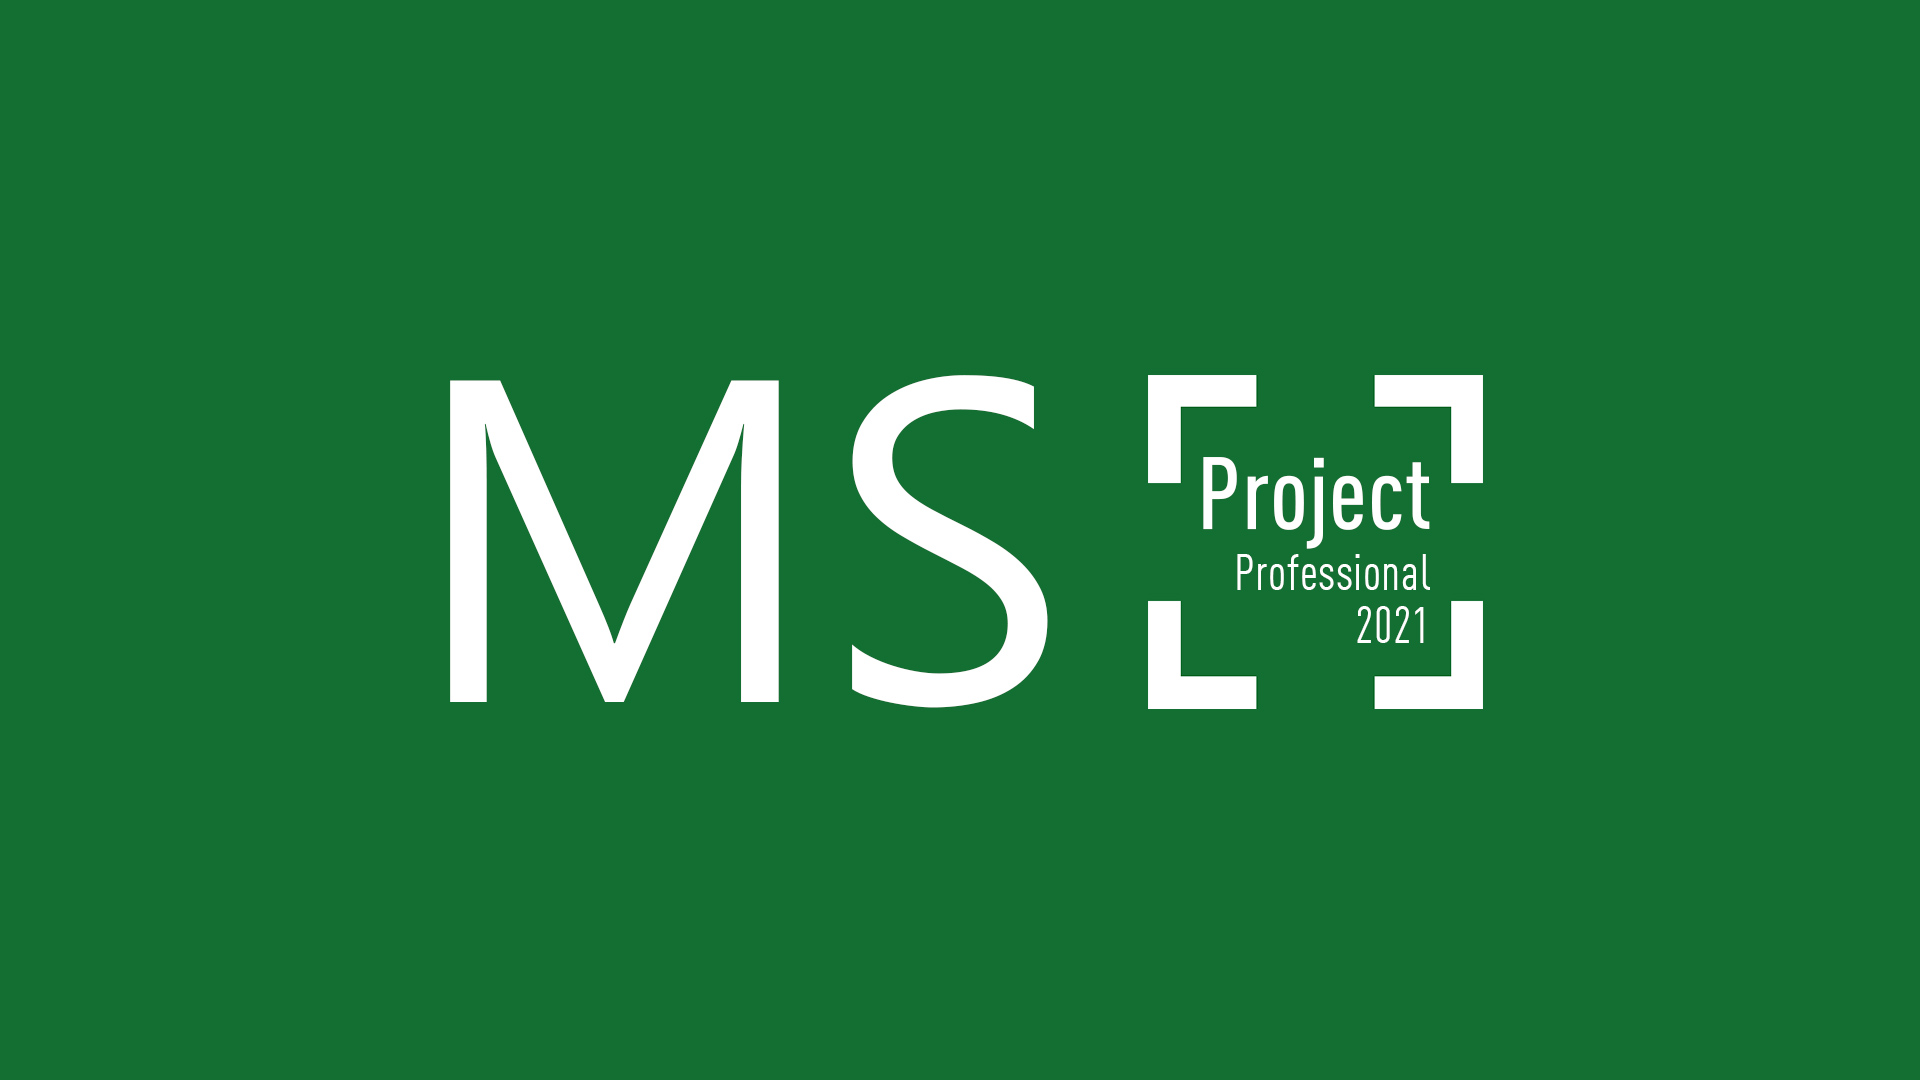 MS Project Professional 2021 CD Key $13.55